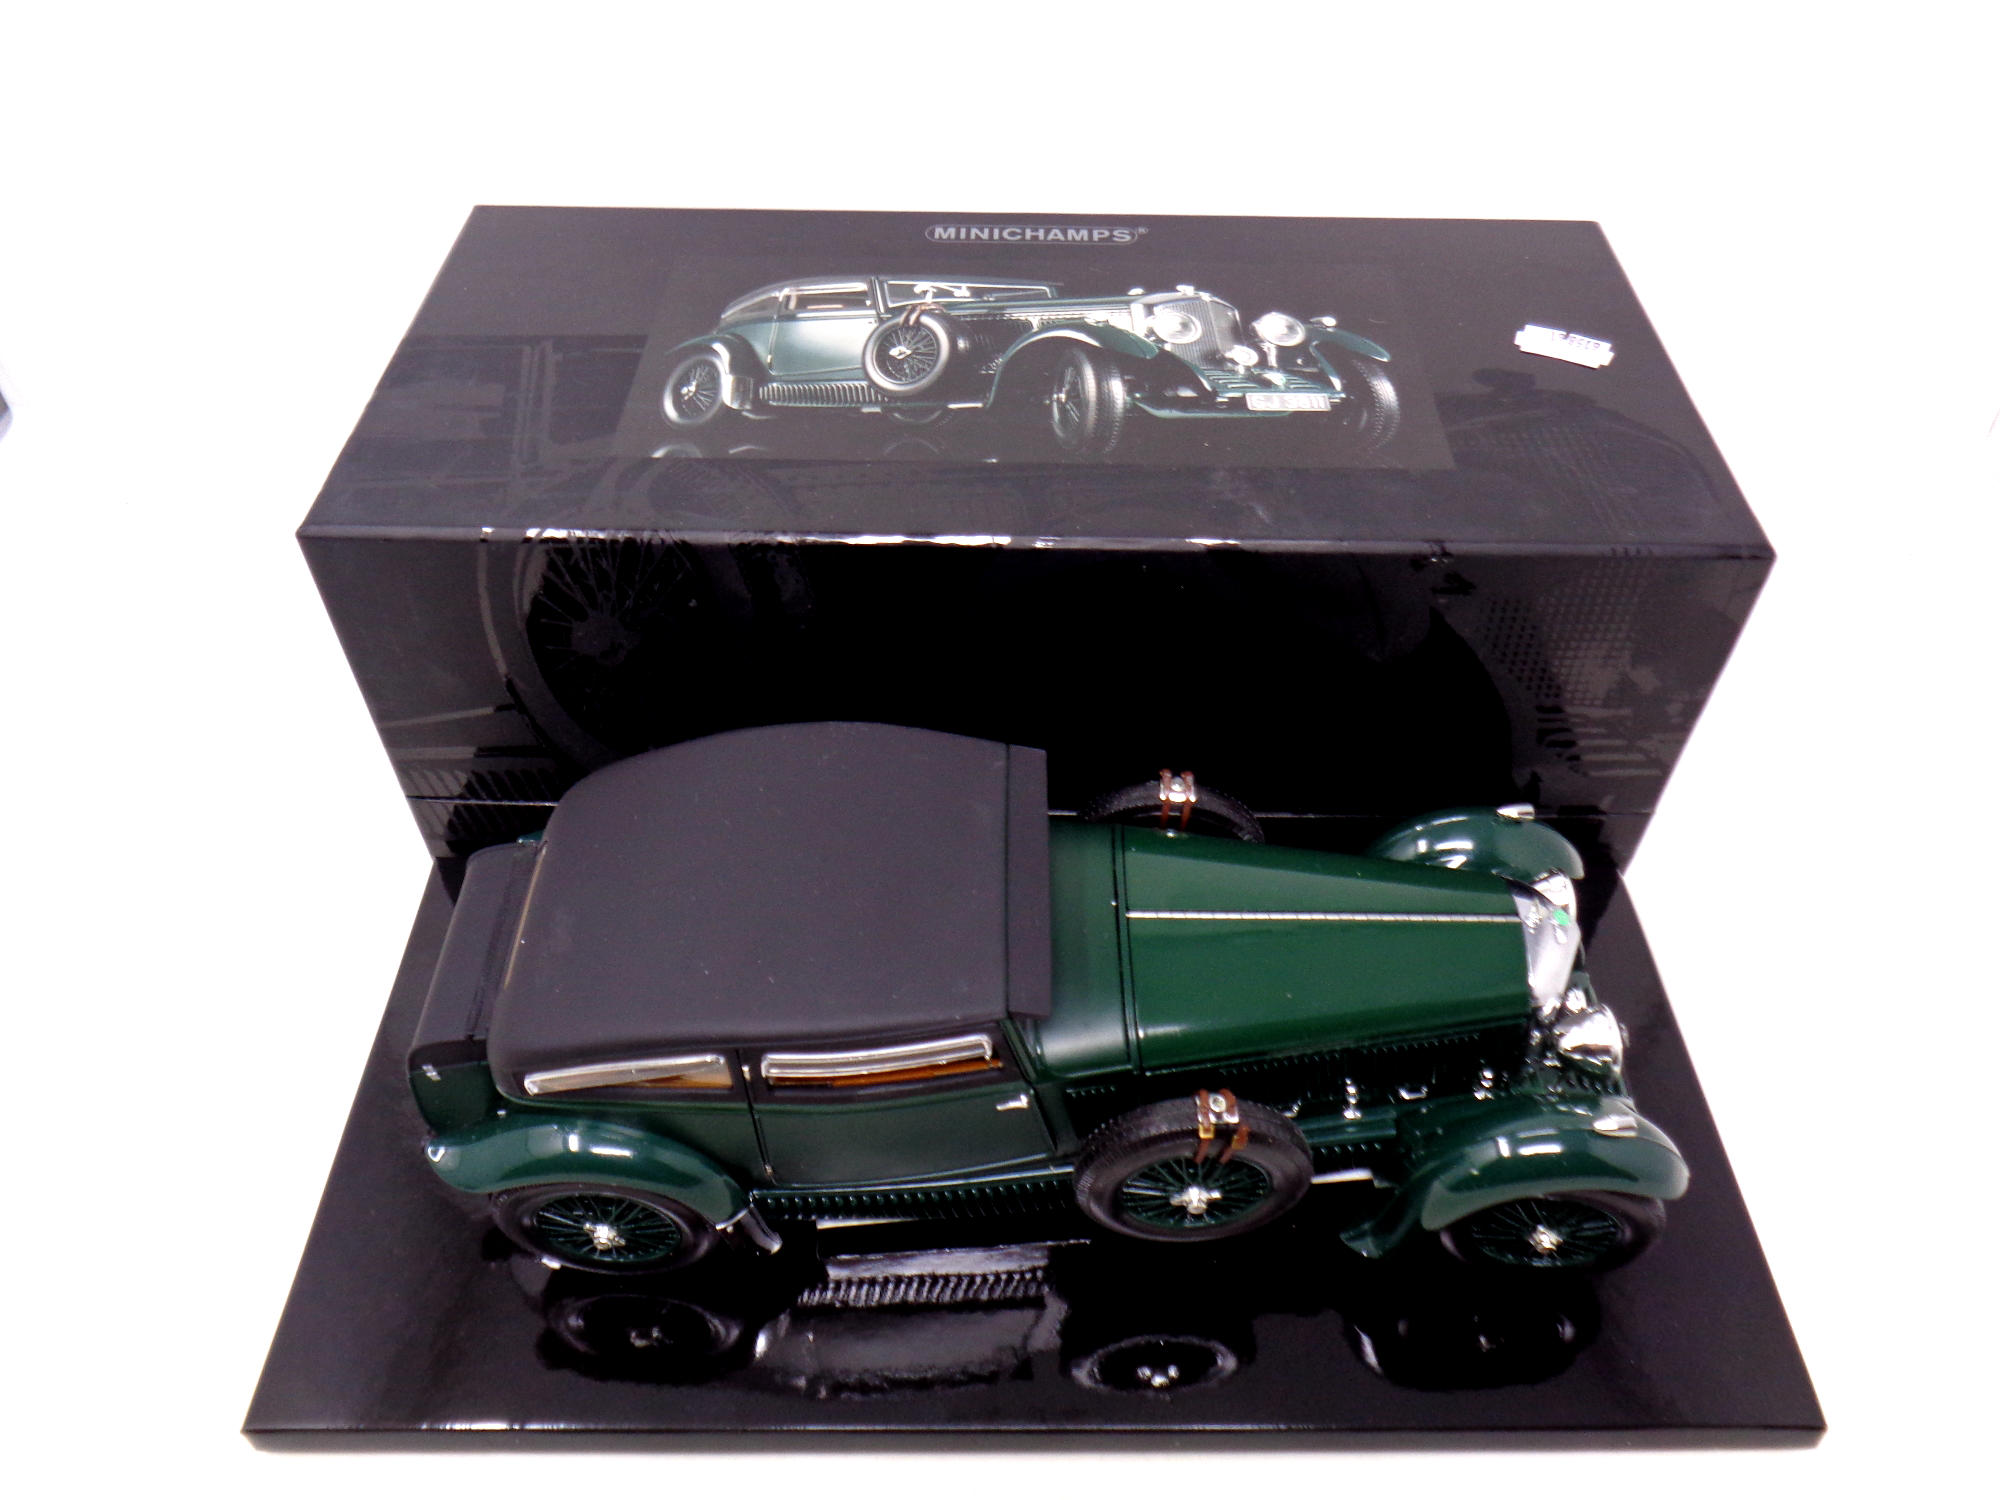 A Minichamps Bentley 6.